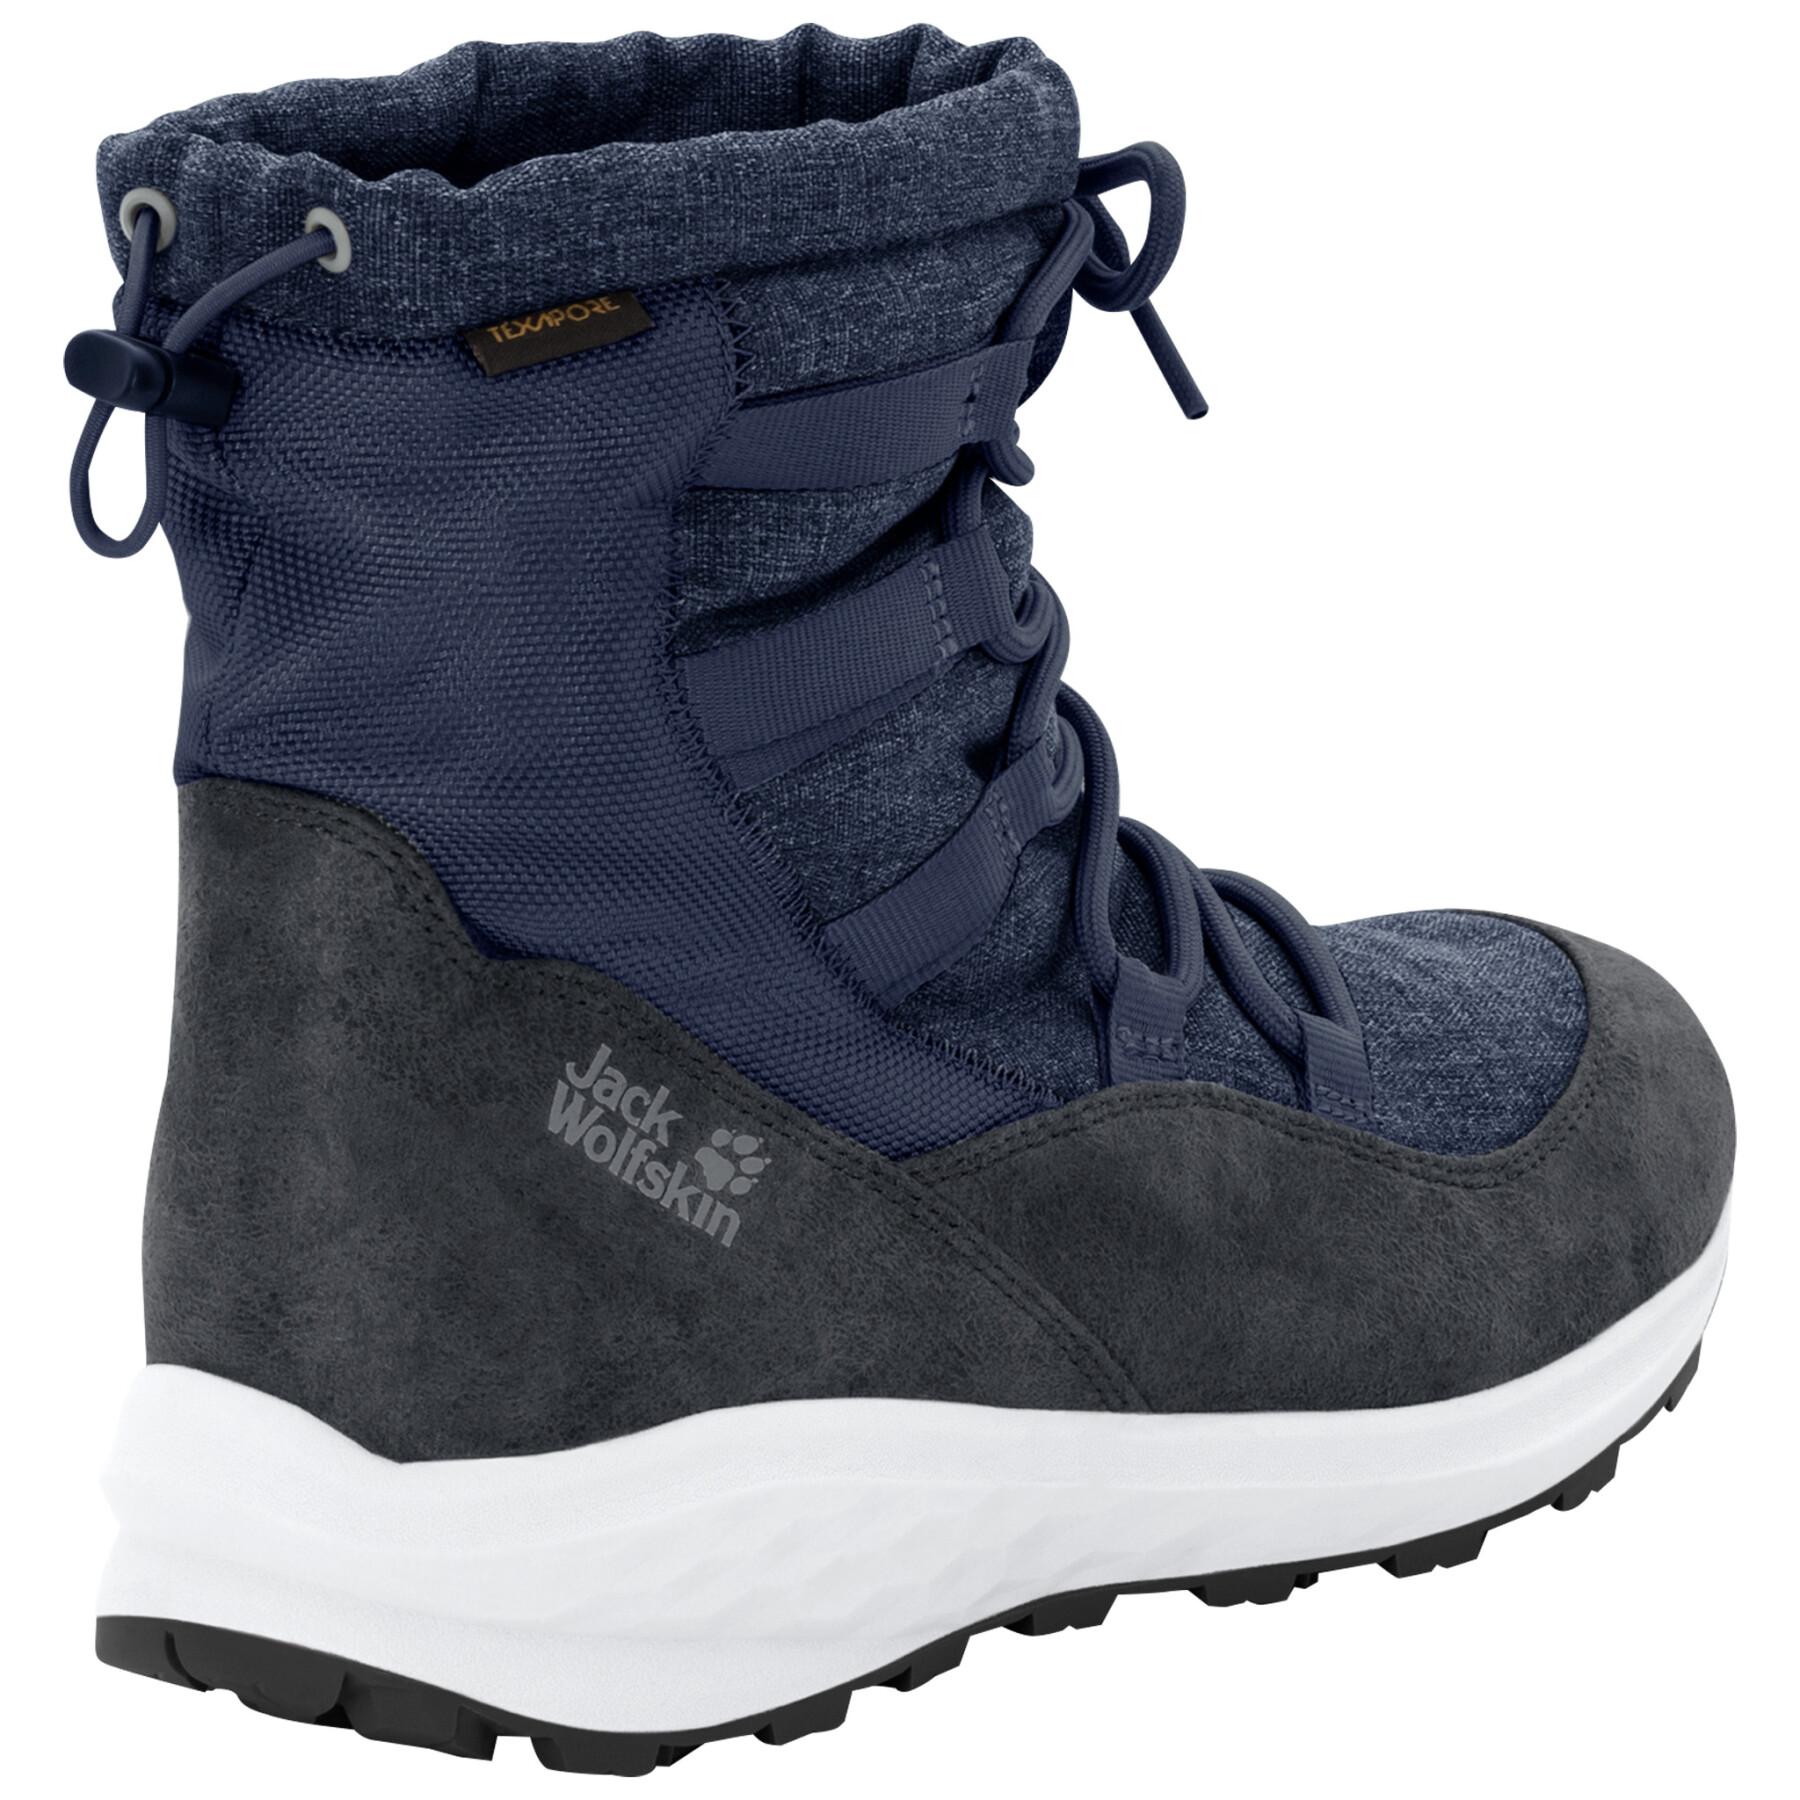 Women's boots Jack Wolfskin nevada texapore mid